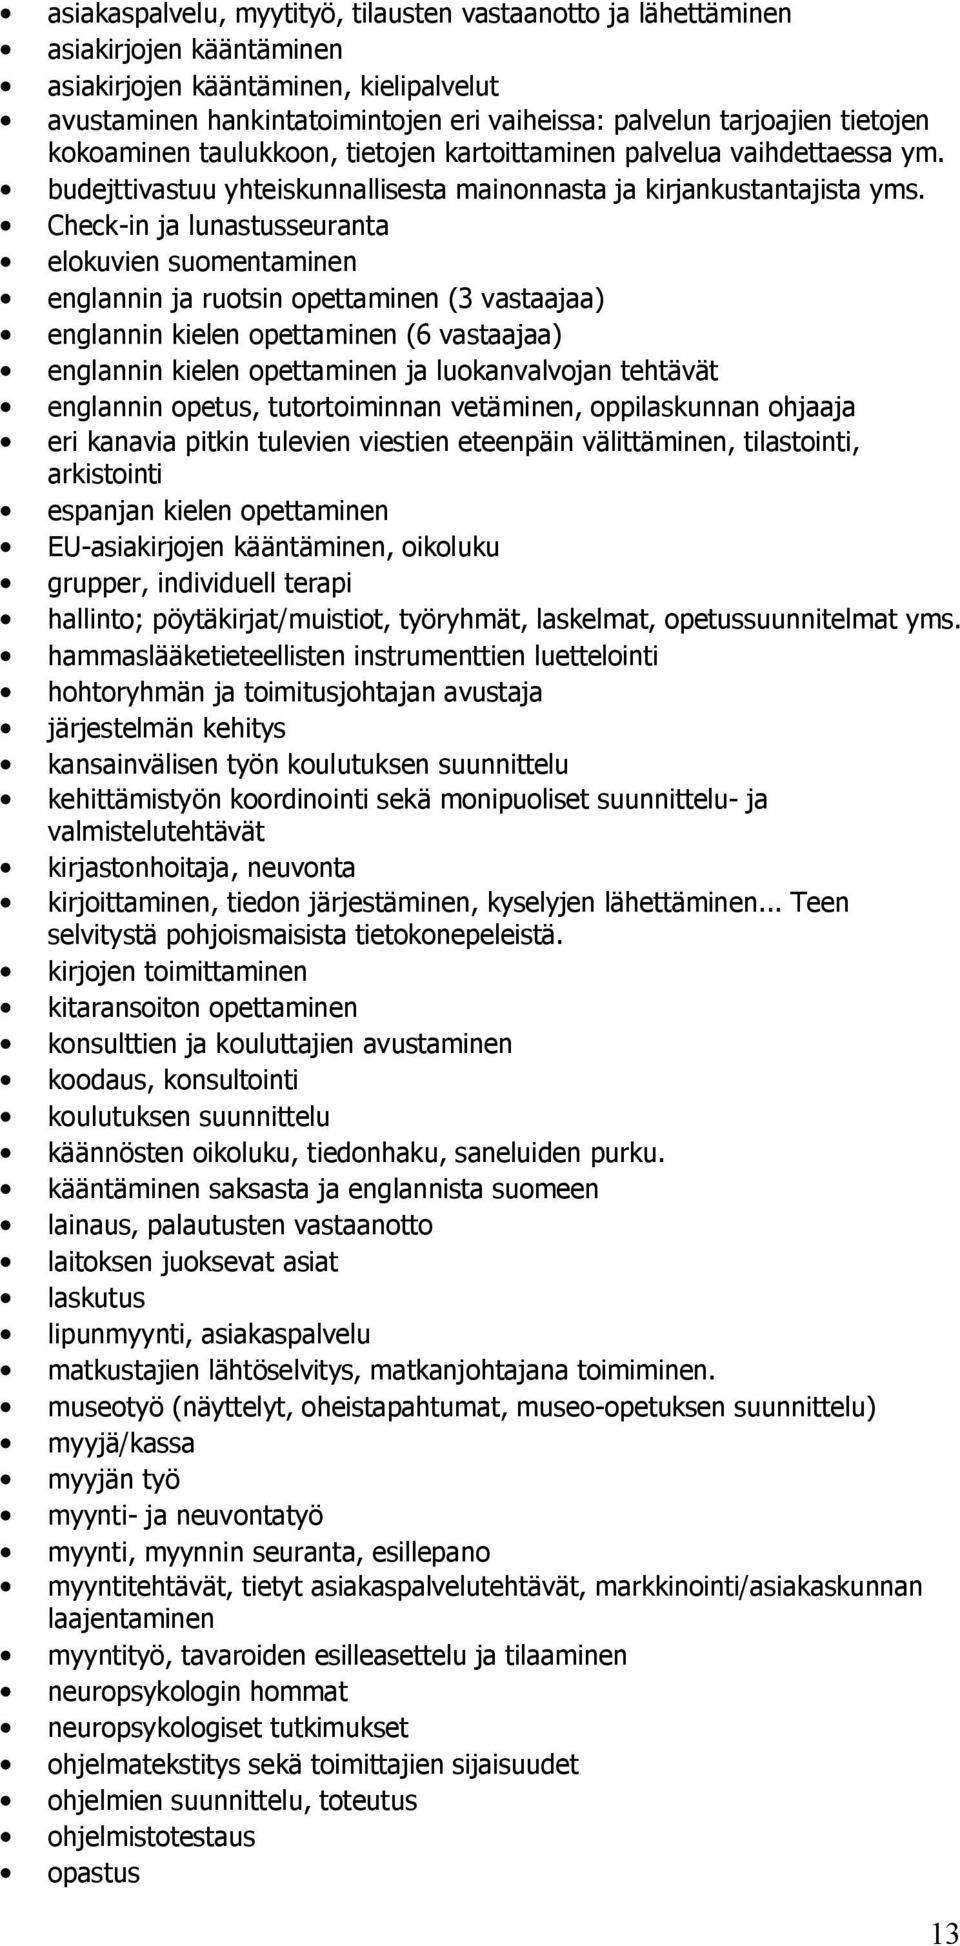 Check i ja luastusseurata elokuvie suometamie eglai ja ruotsi opettamie (3 vastaajaa) eglai kiele opettamie (6 vastaajaa) eglai kiele opettamie ja luokavalvoja tehtävät eglai opetus, tutortoimia